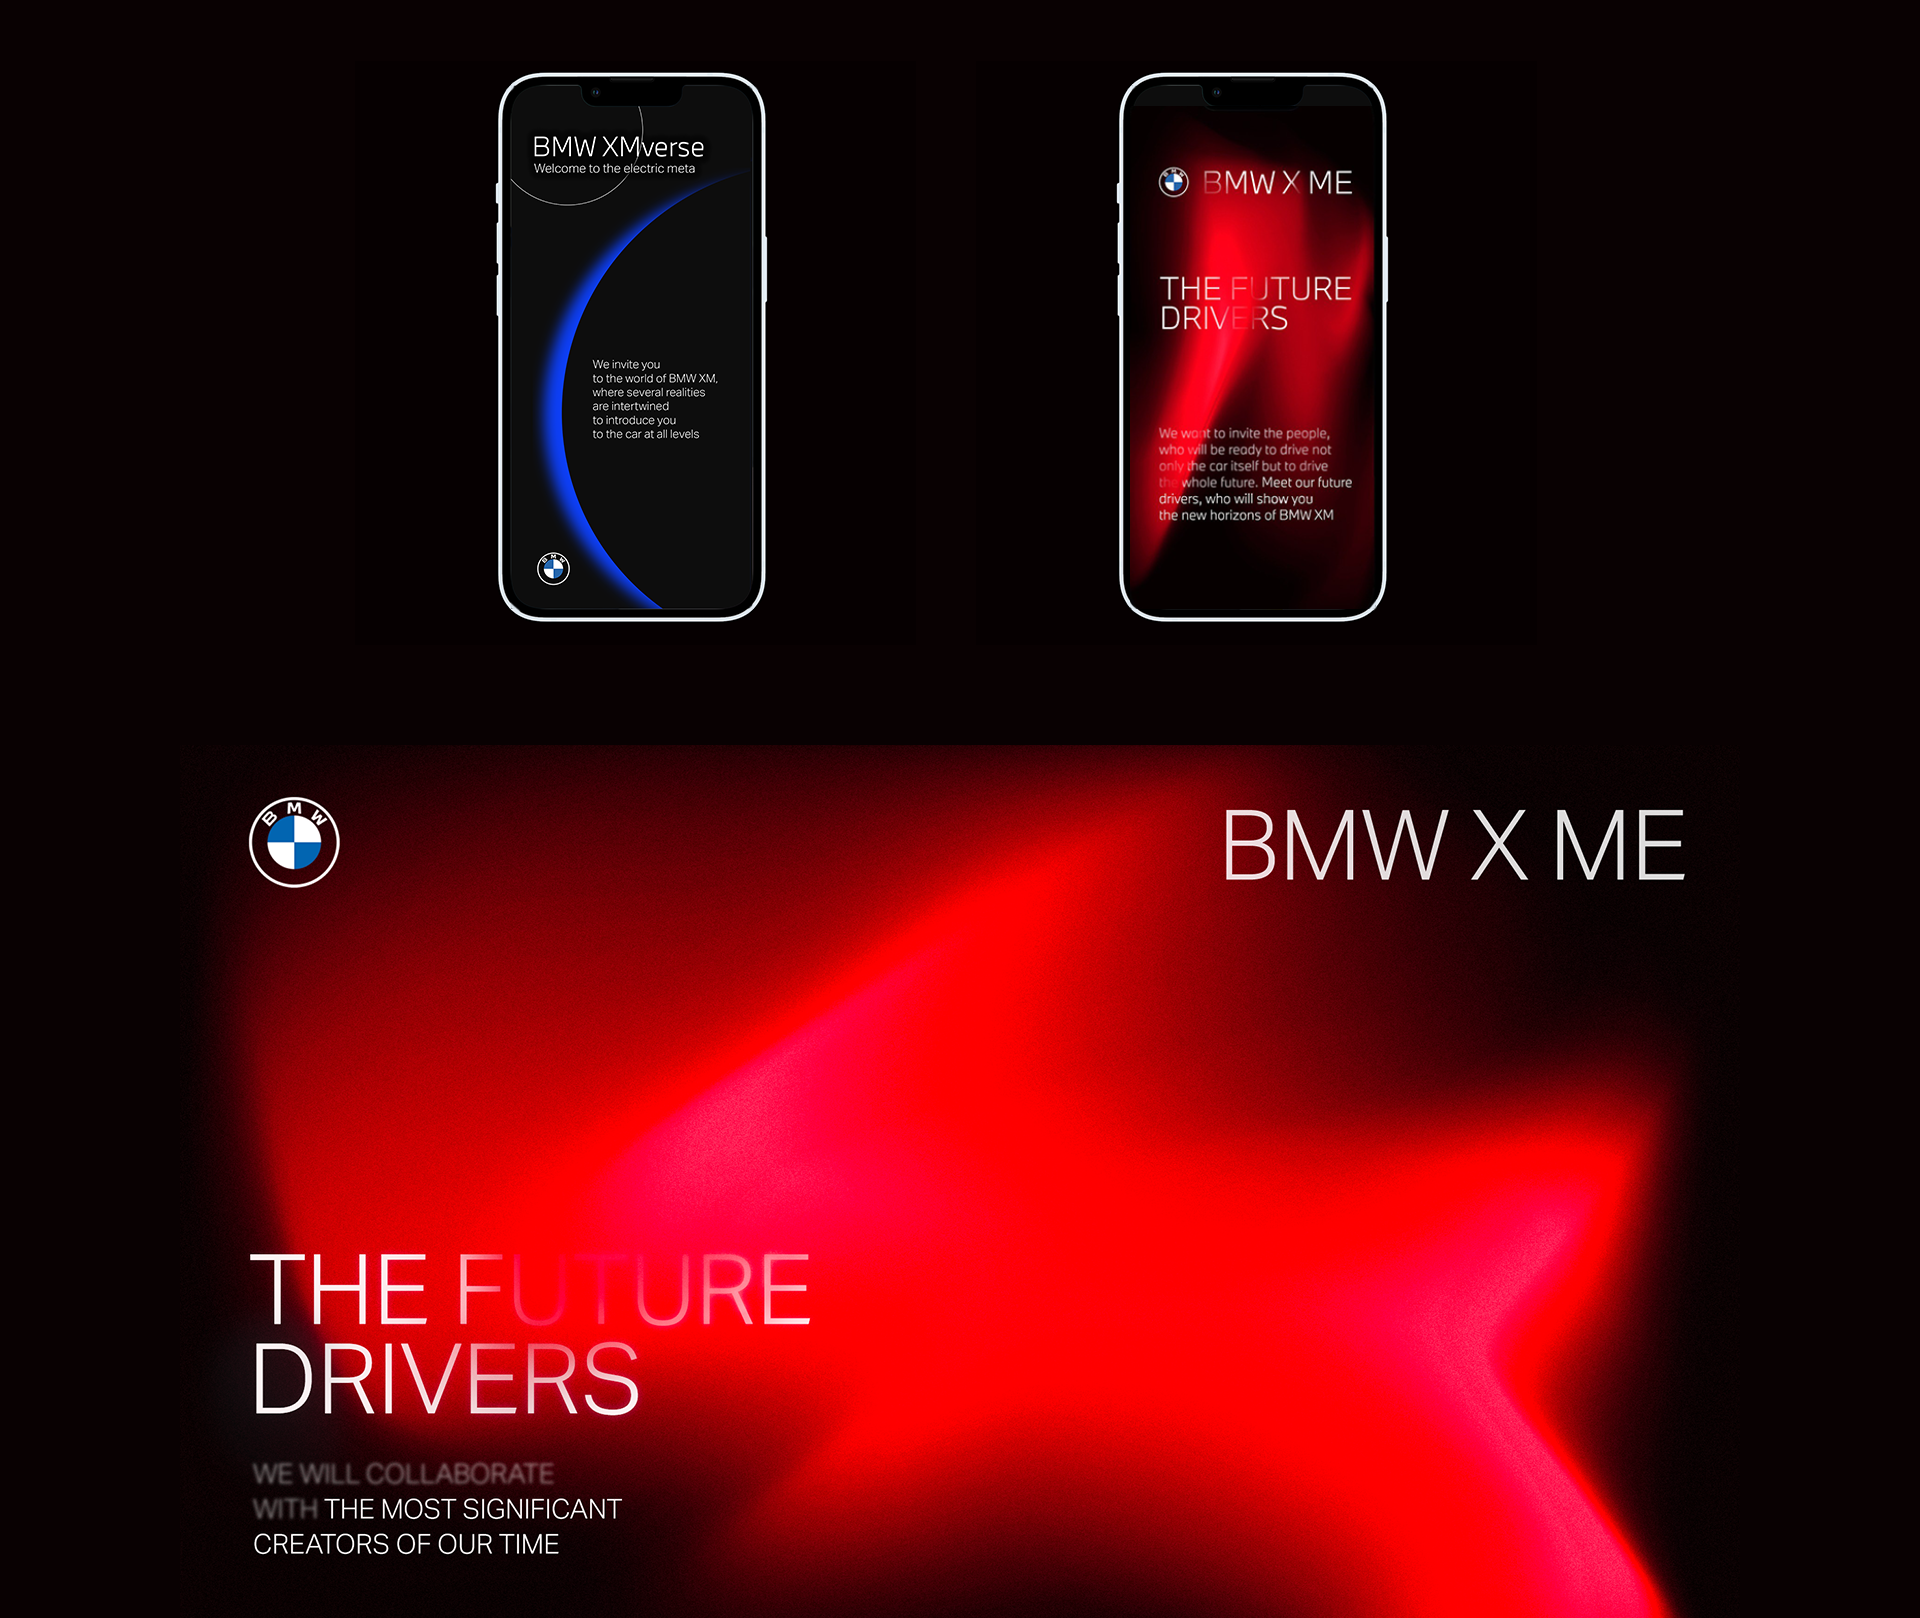 BMW X ME